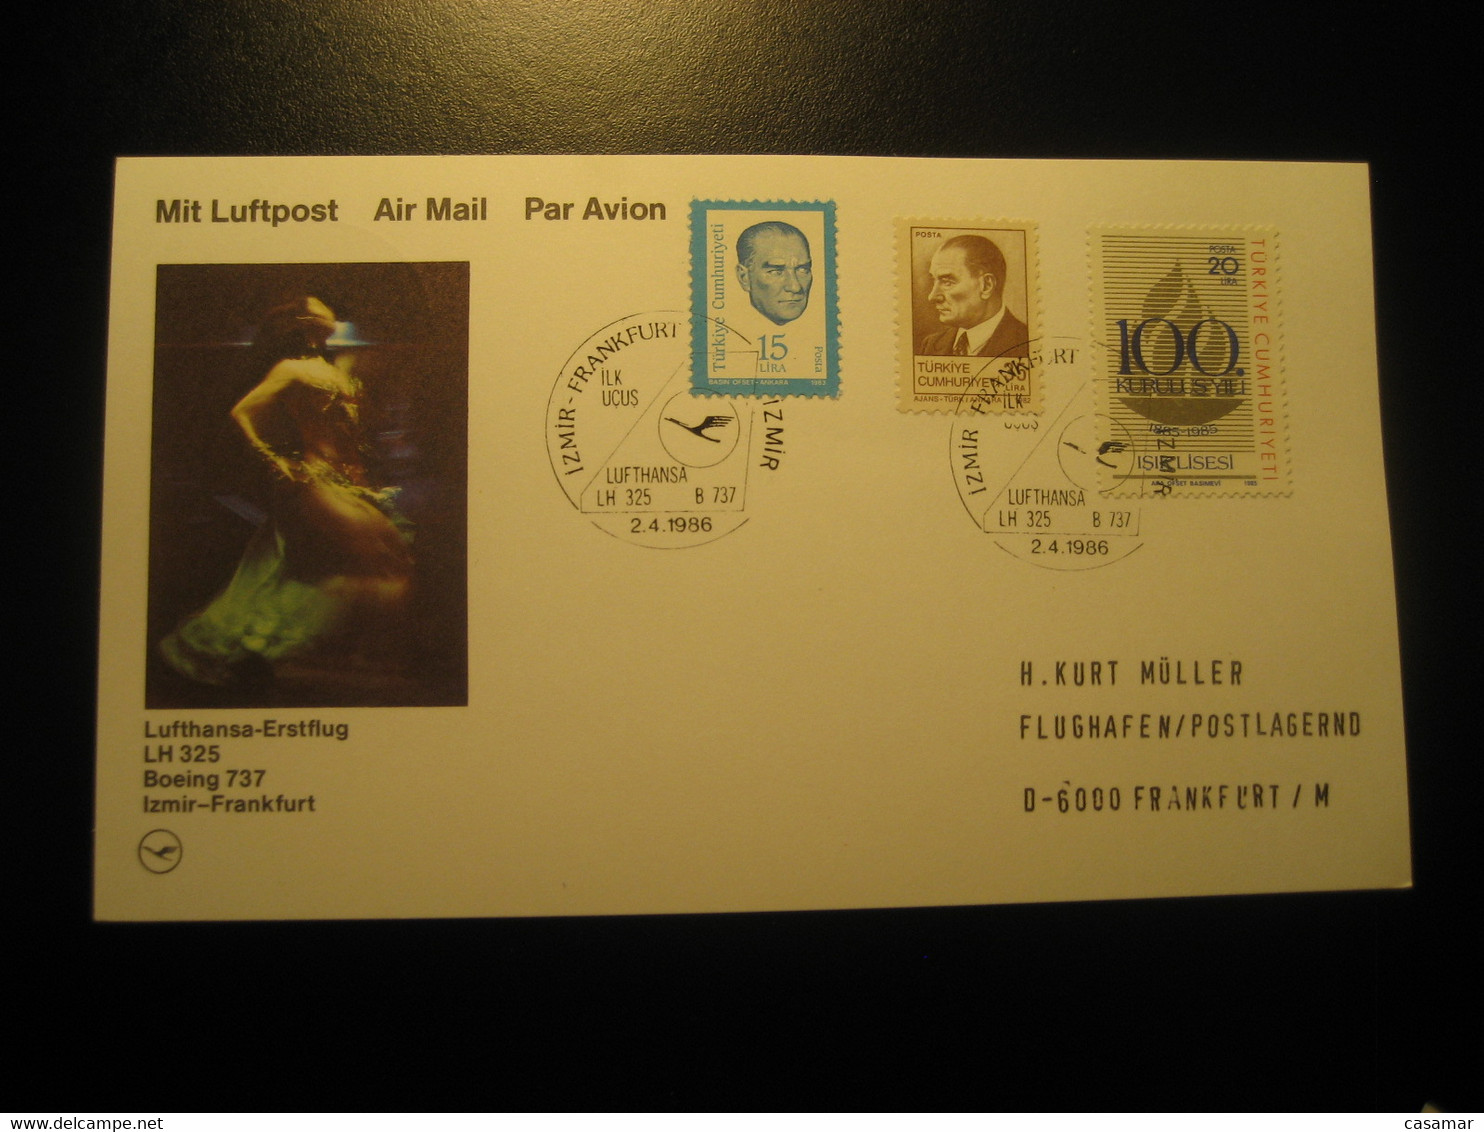 Izmir Frankfurt 1986 Lufthansa Airline Boeing 737 First Flight 3 Stamp Cancel Card Turkey Germany - Corréo Aéreo